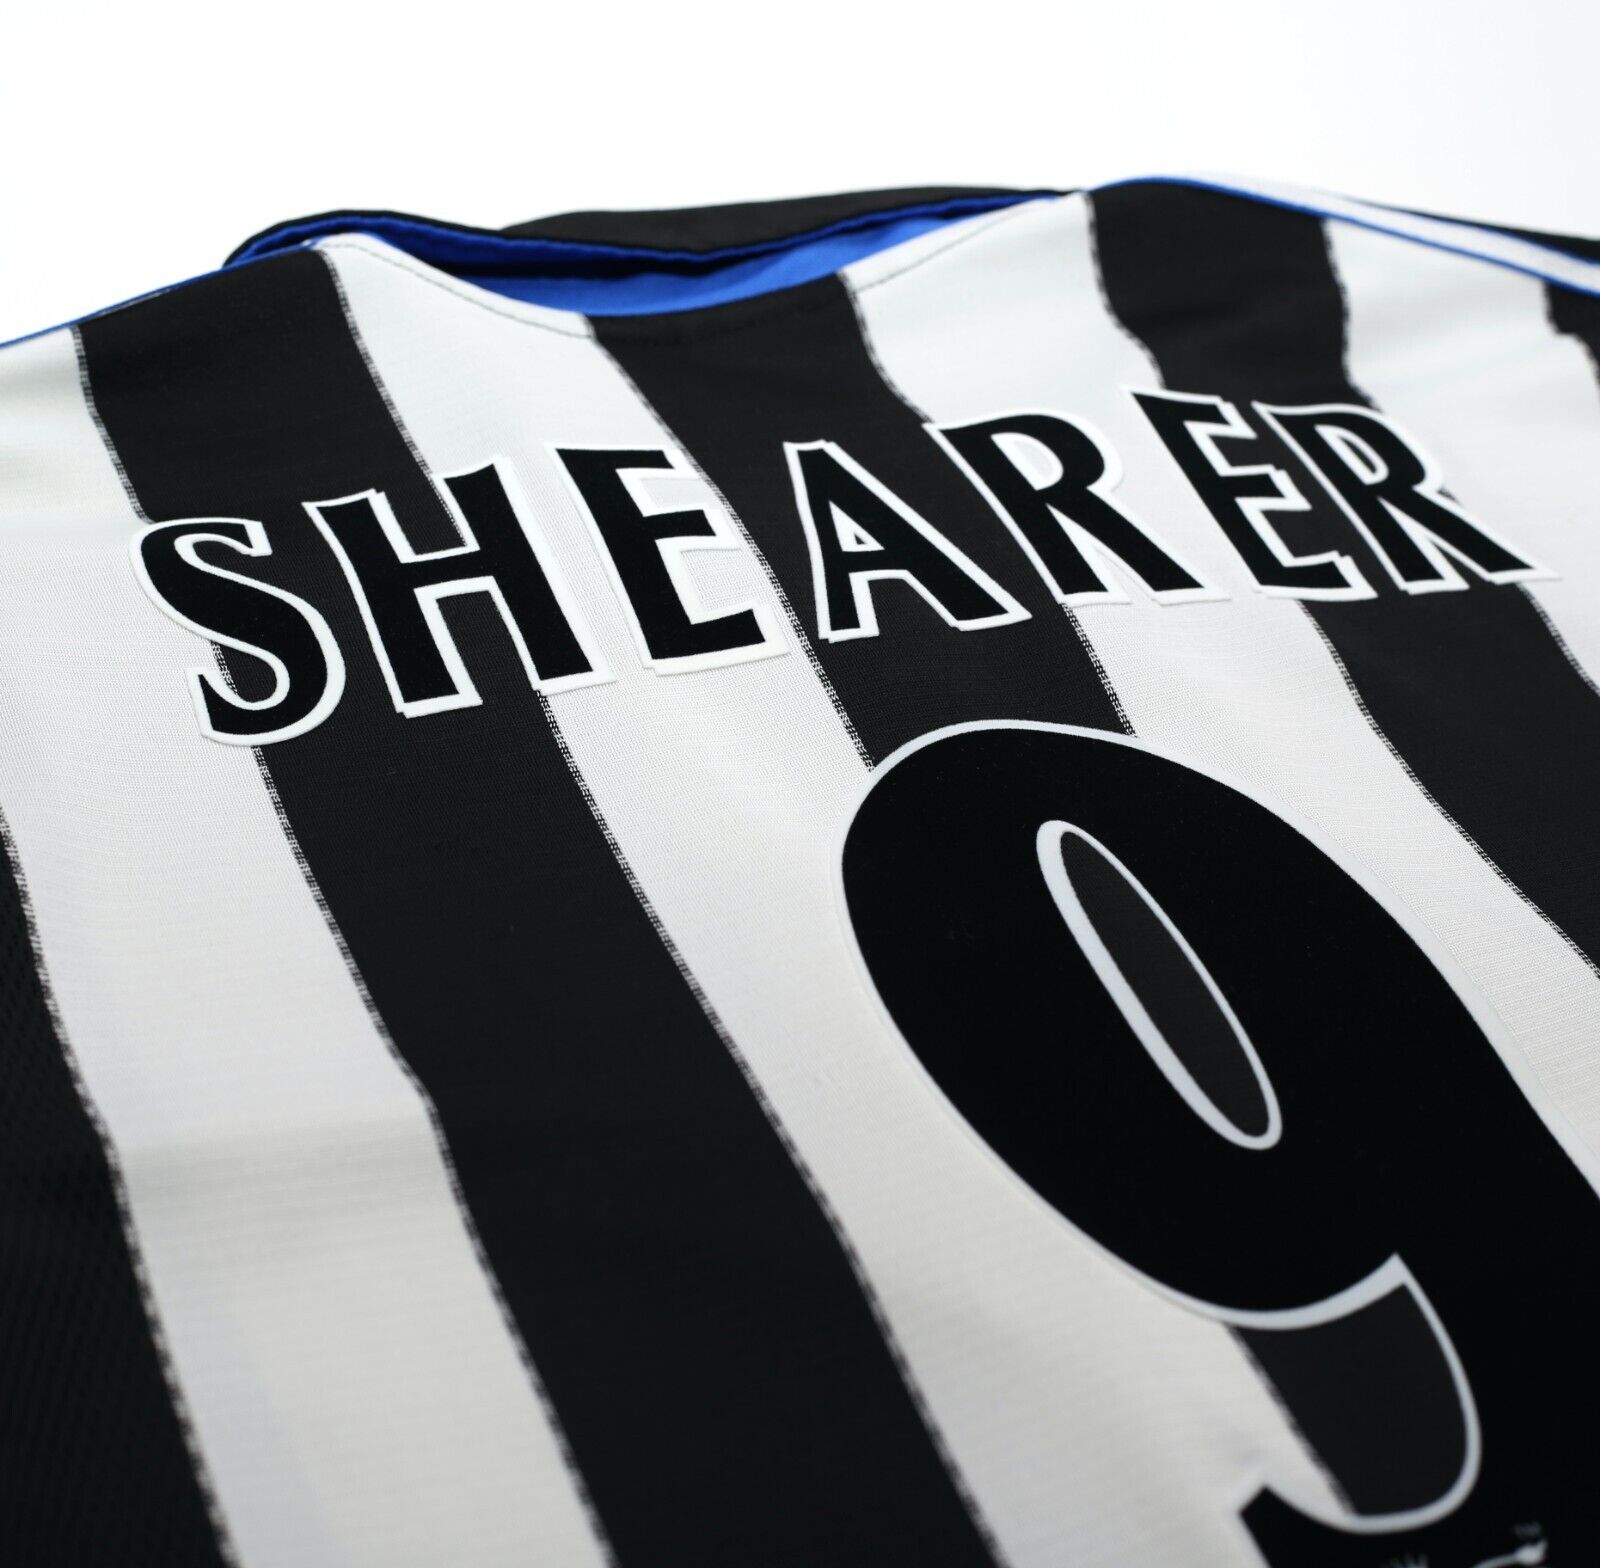 1999/00 SHEARER #9 Newcastle United Vintage adidas Football Shirt (S) -  Football Shirt Collective